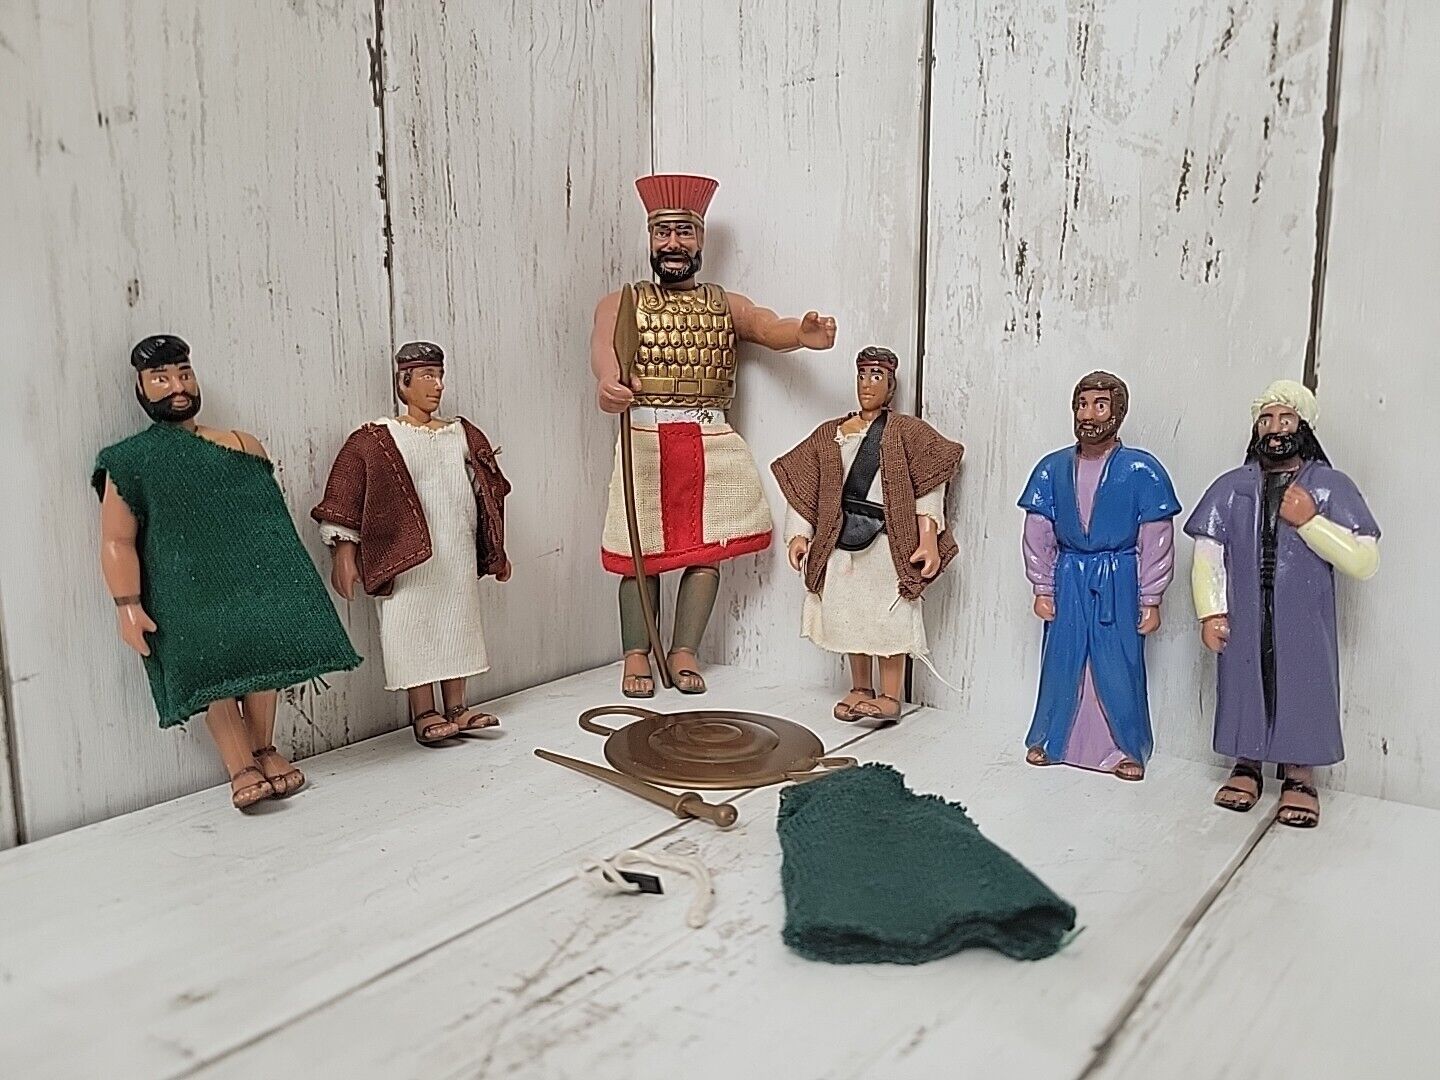 Lot 6 Biblical Vintage Figurines - Goliath, David, Sampson, and an Assortment